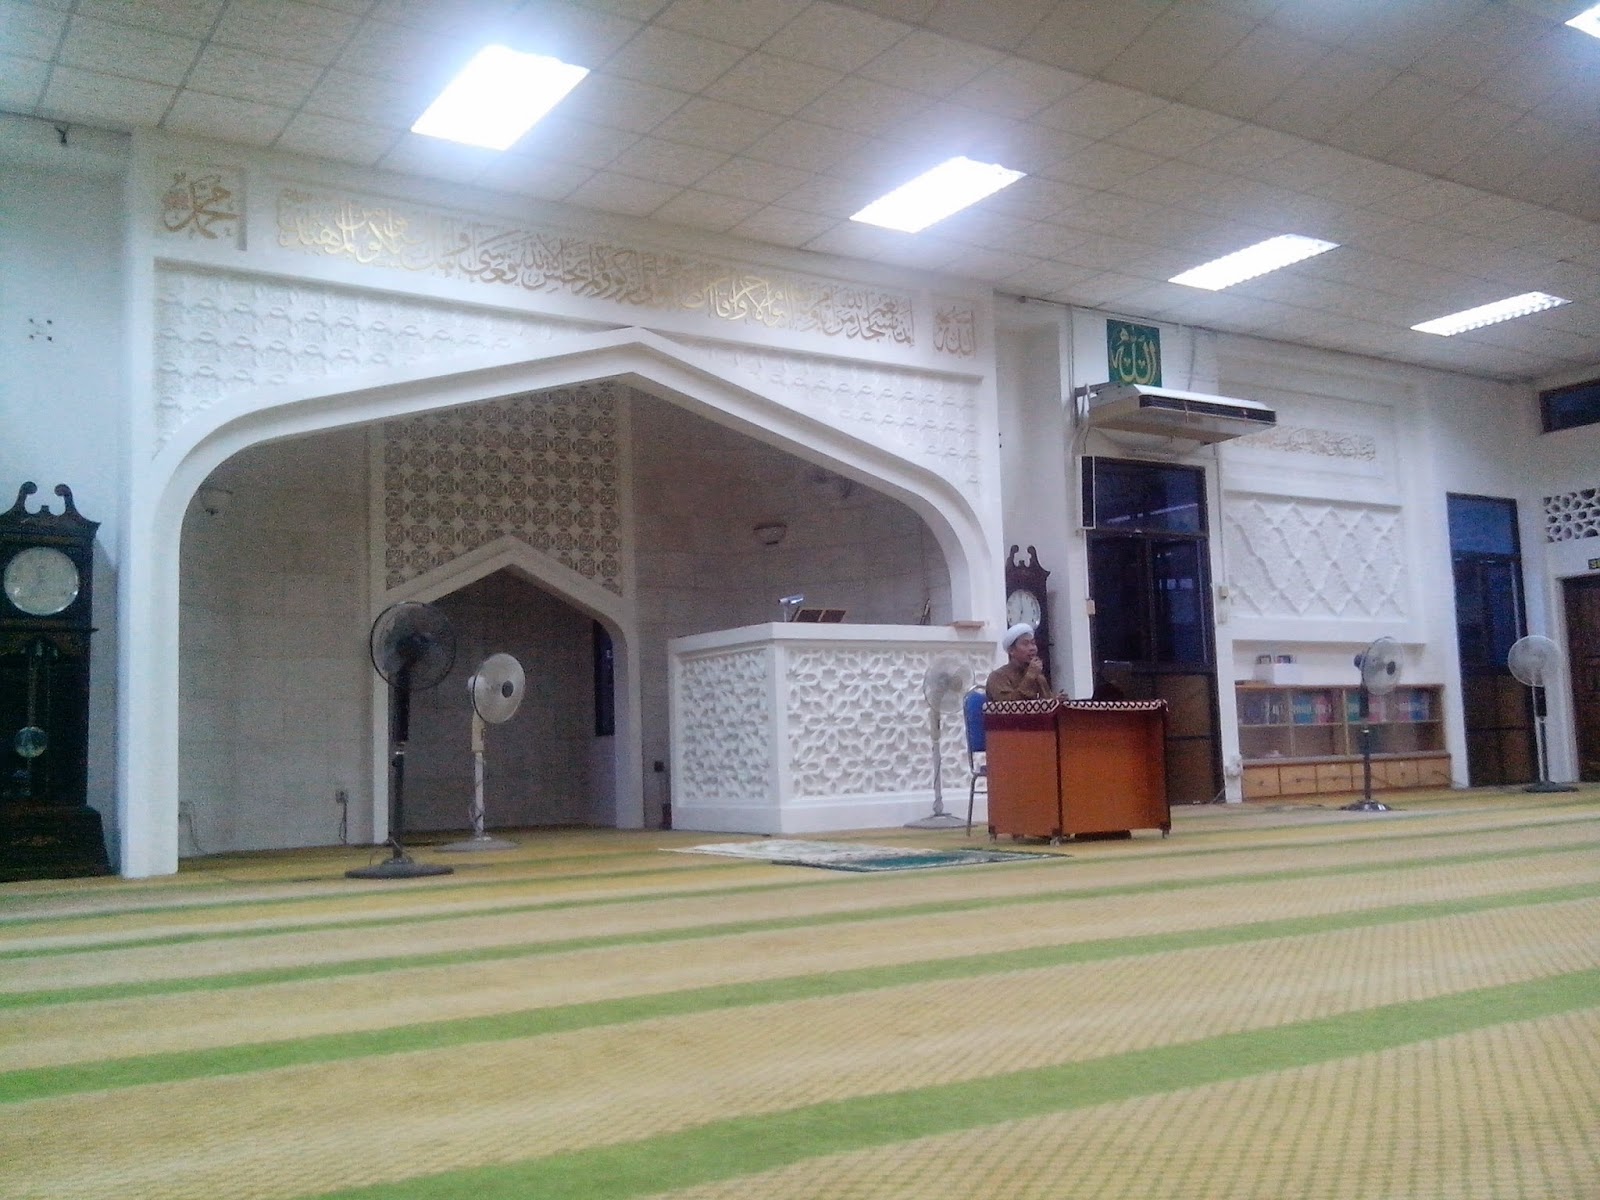 Yang Menjengkelkan Di Surau Masjid ~ Kendatipun Sekadar 